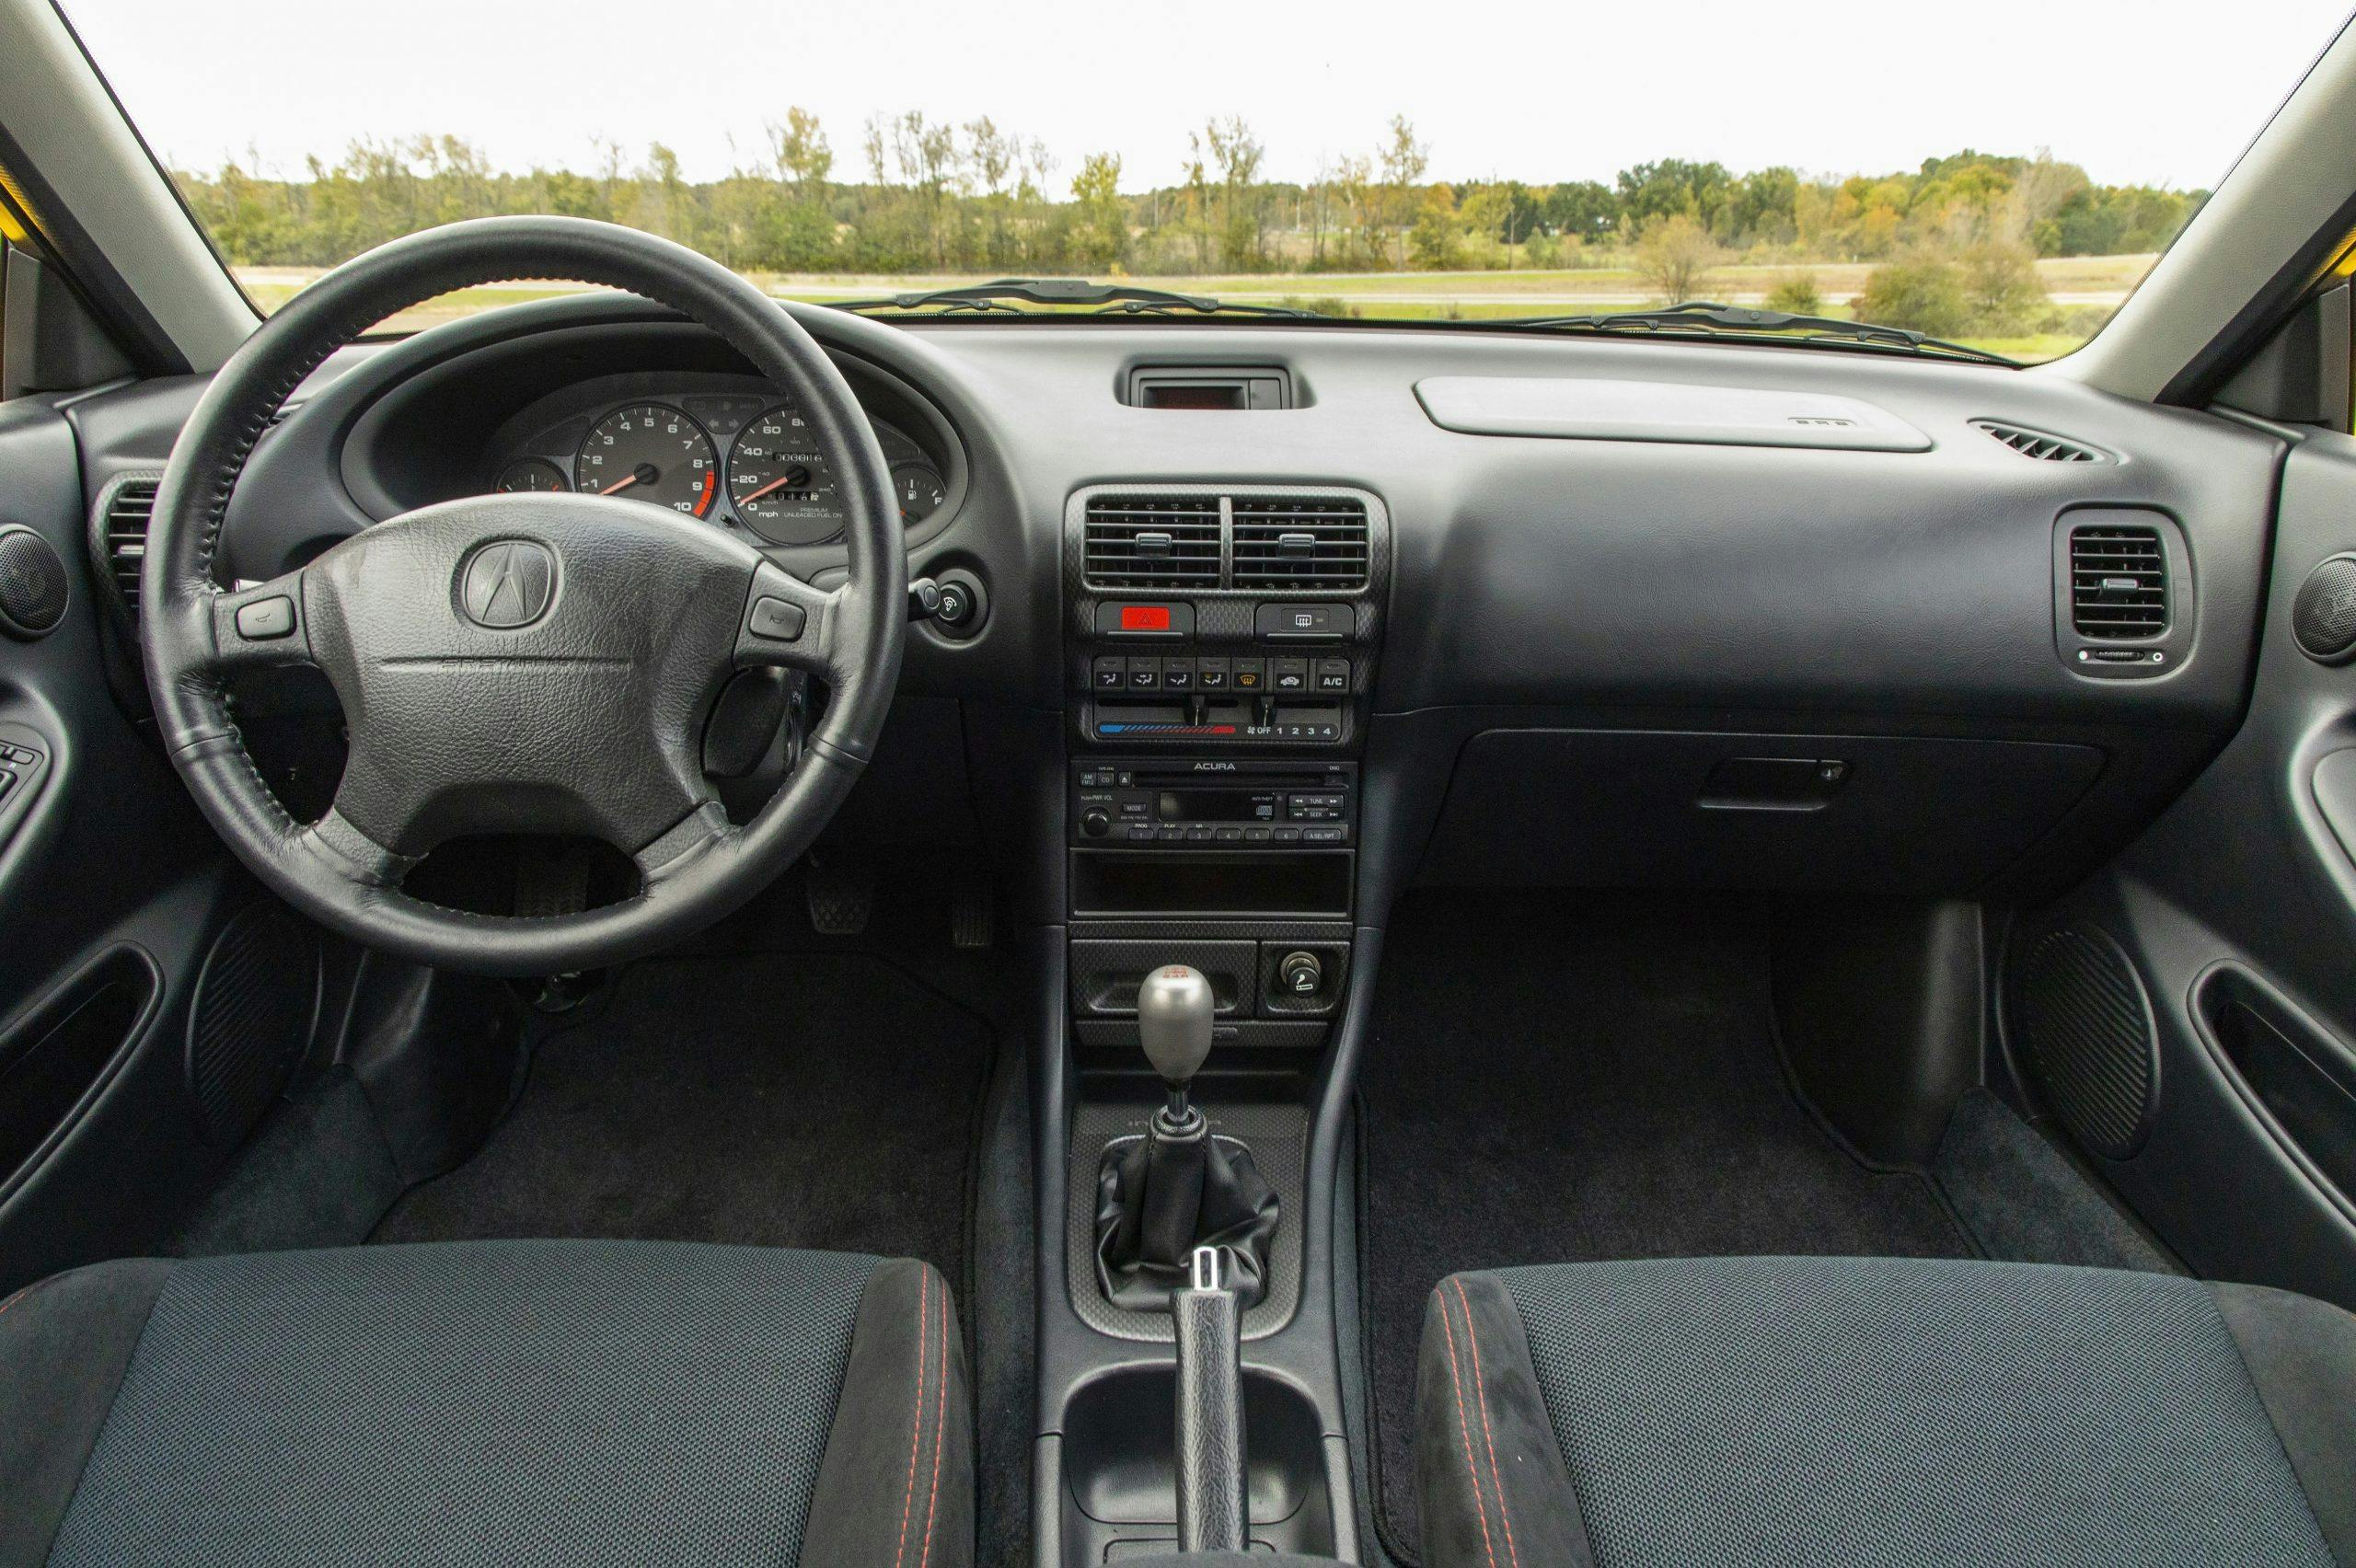 2001 Acura Integra Type R interior